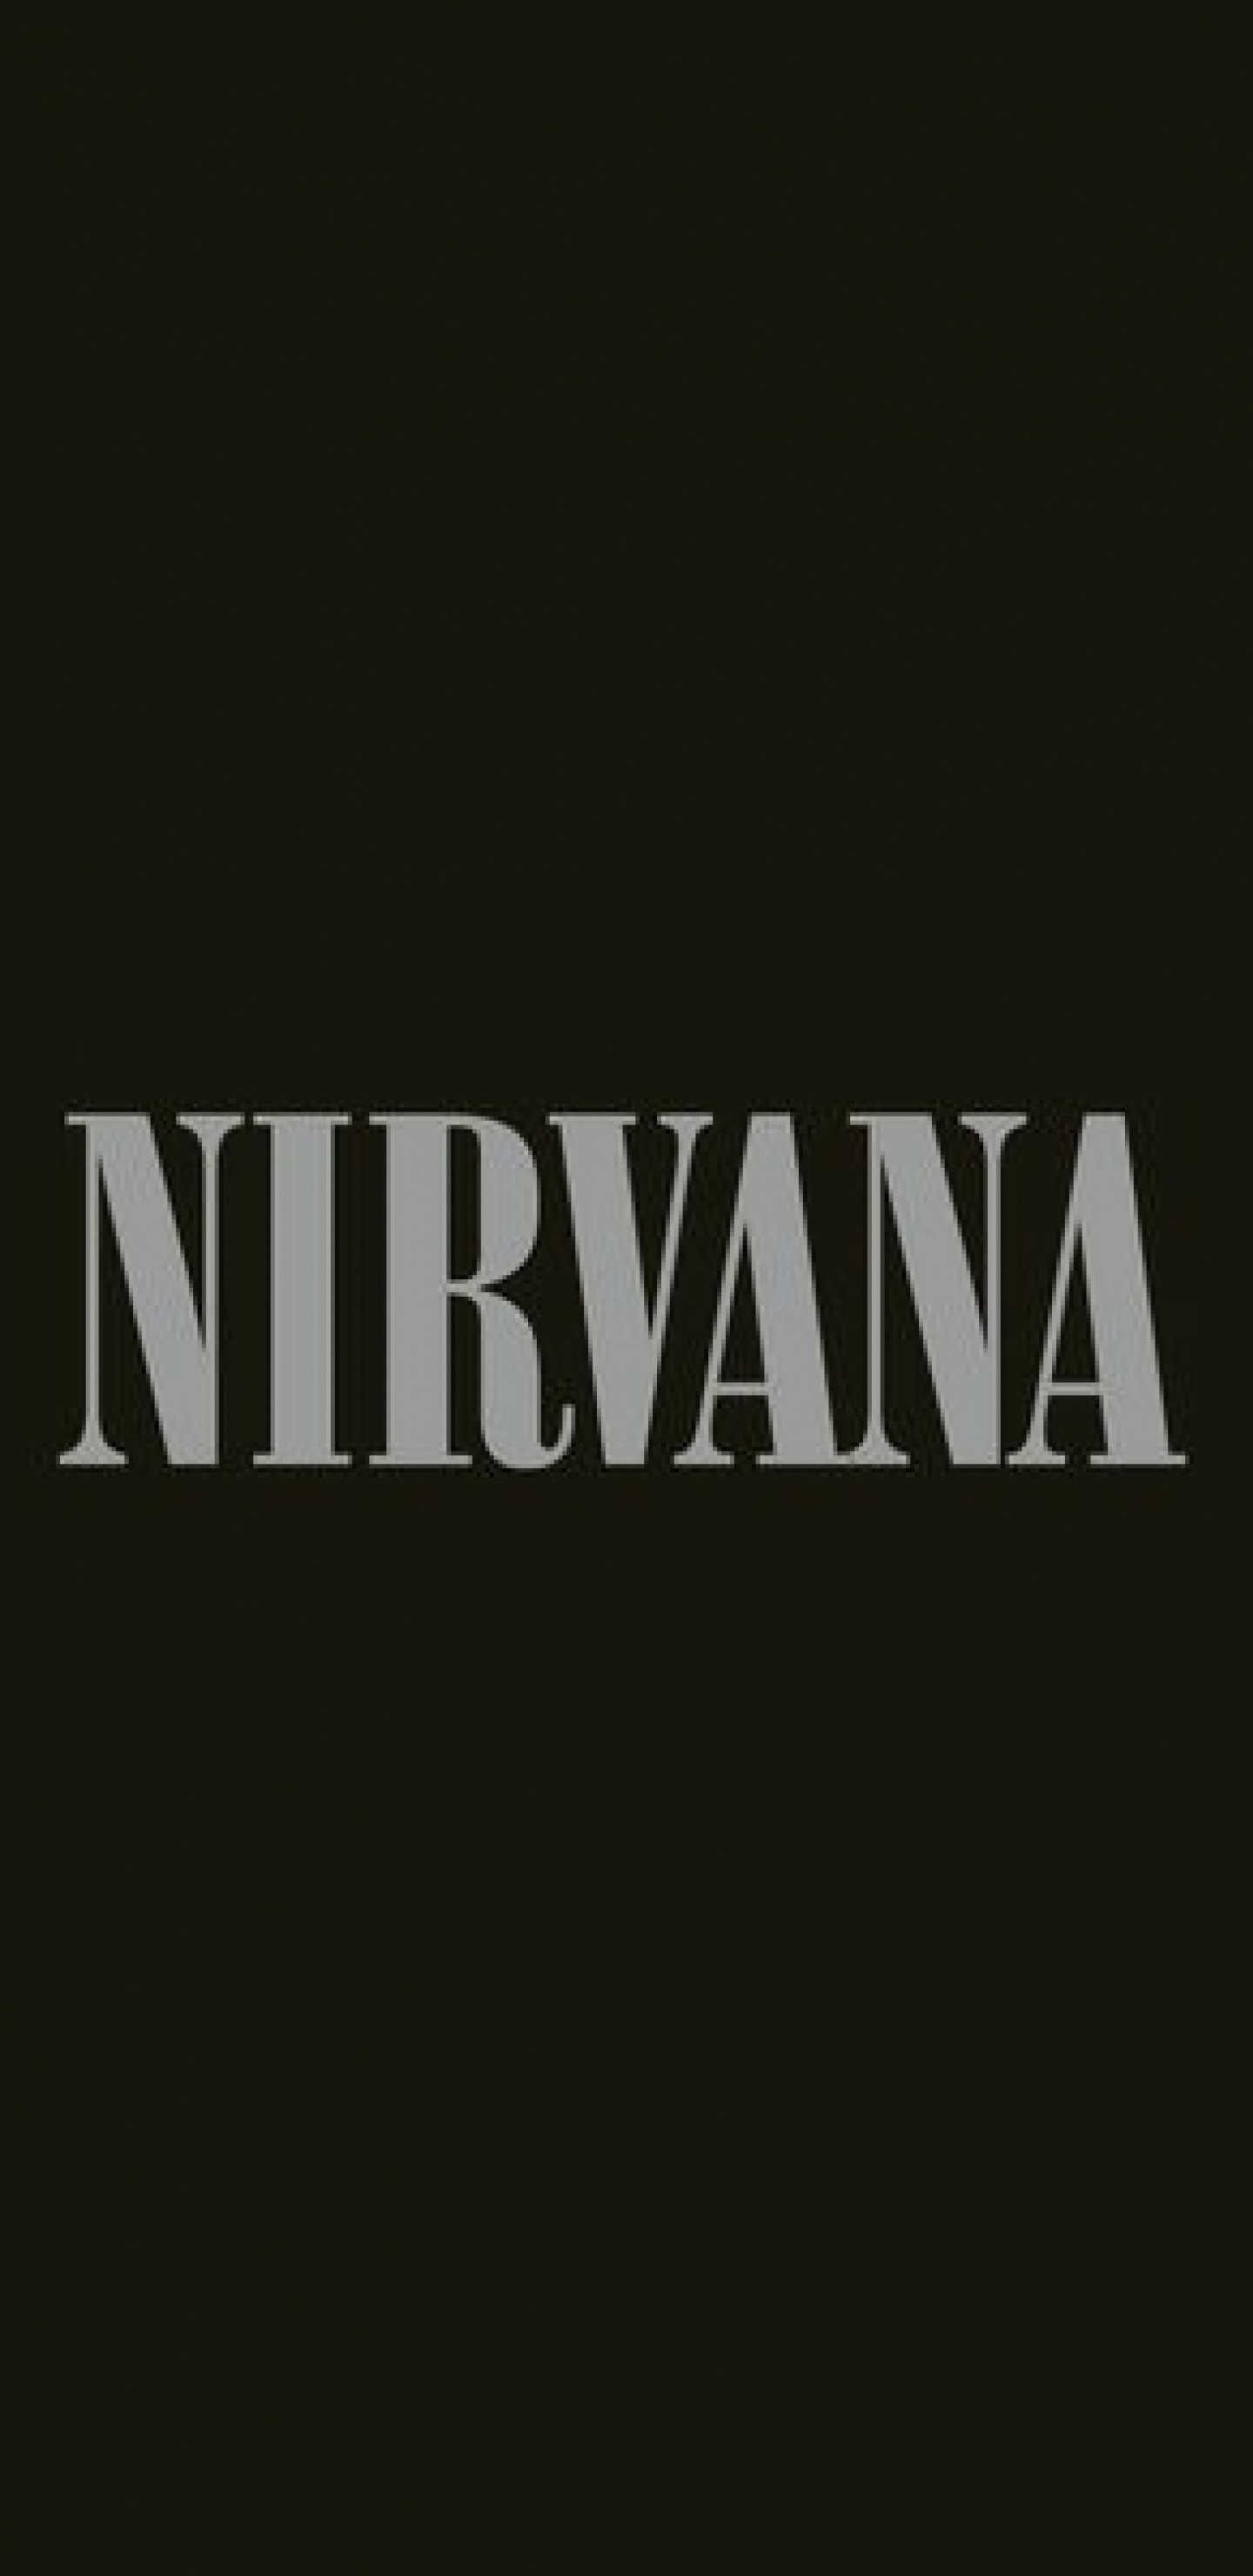 Nirvana, Album, Graphisme, Texte, Noir. Wallpaper in 1440x2960 Resolution